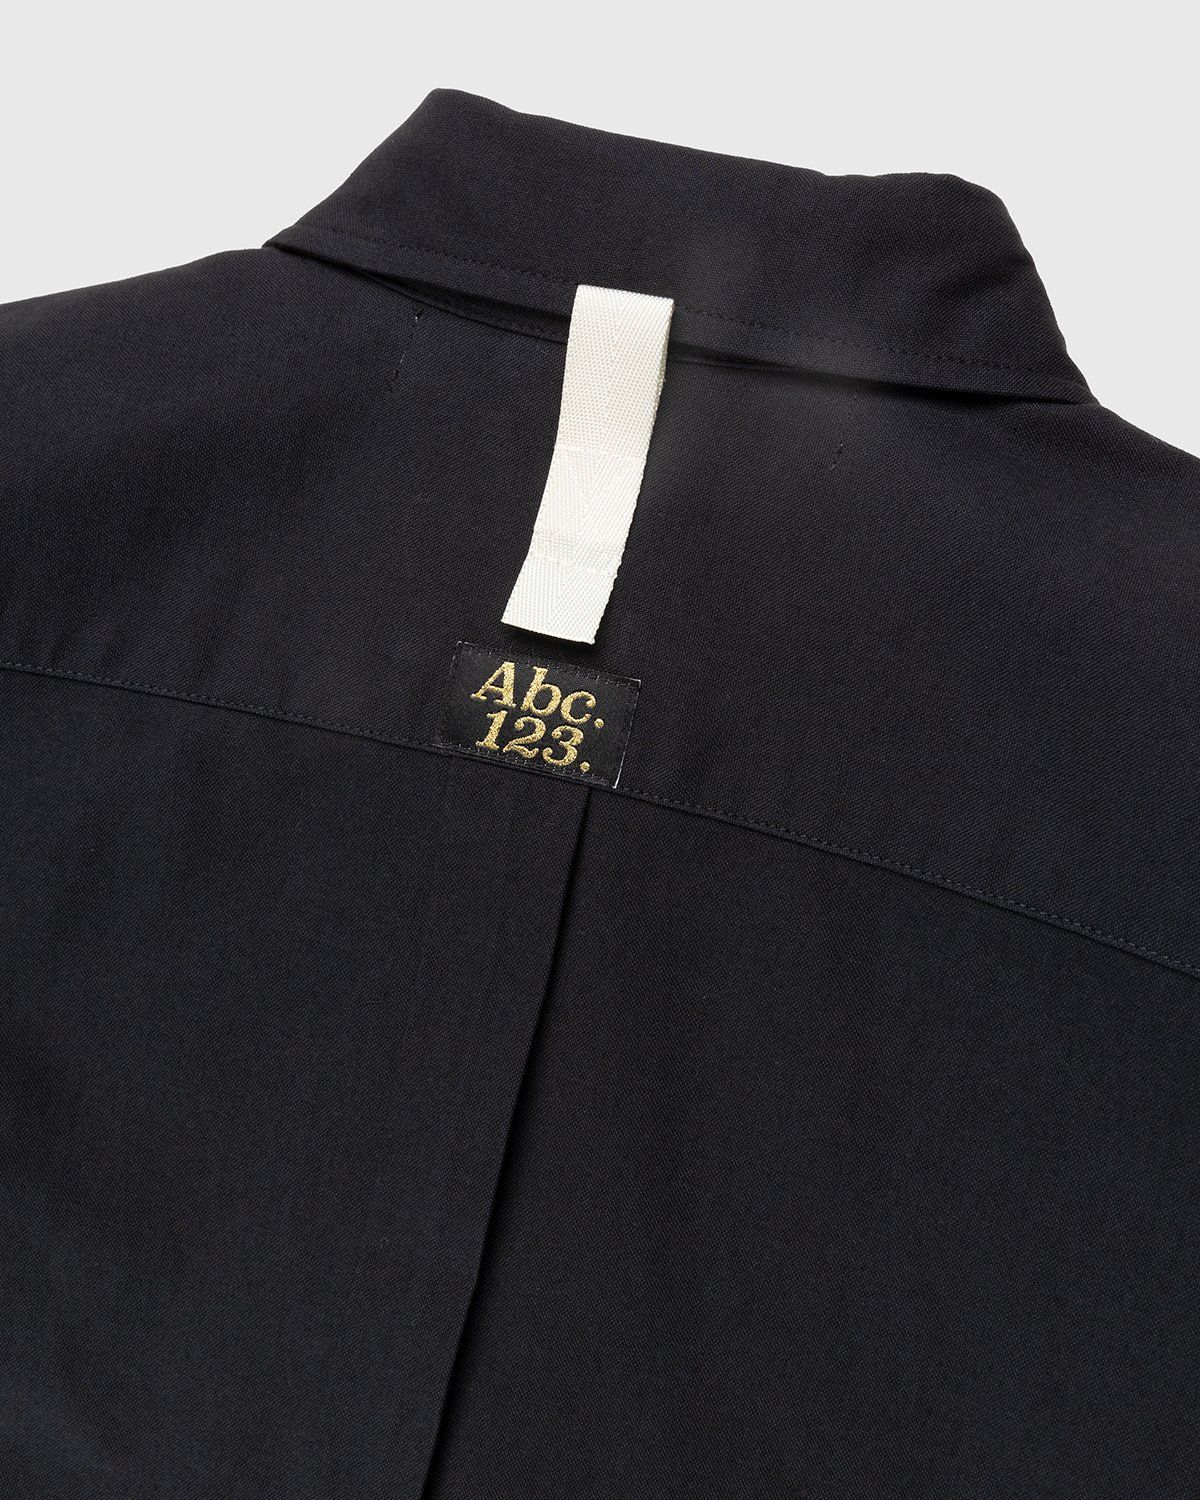 Abc. – Oxford Woven Shirt Anthracite - Longsleeve Shirts - Black - Image 5